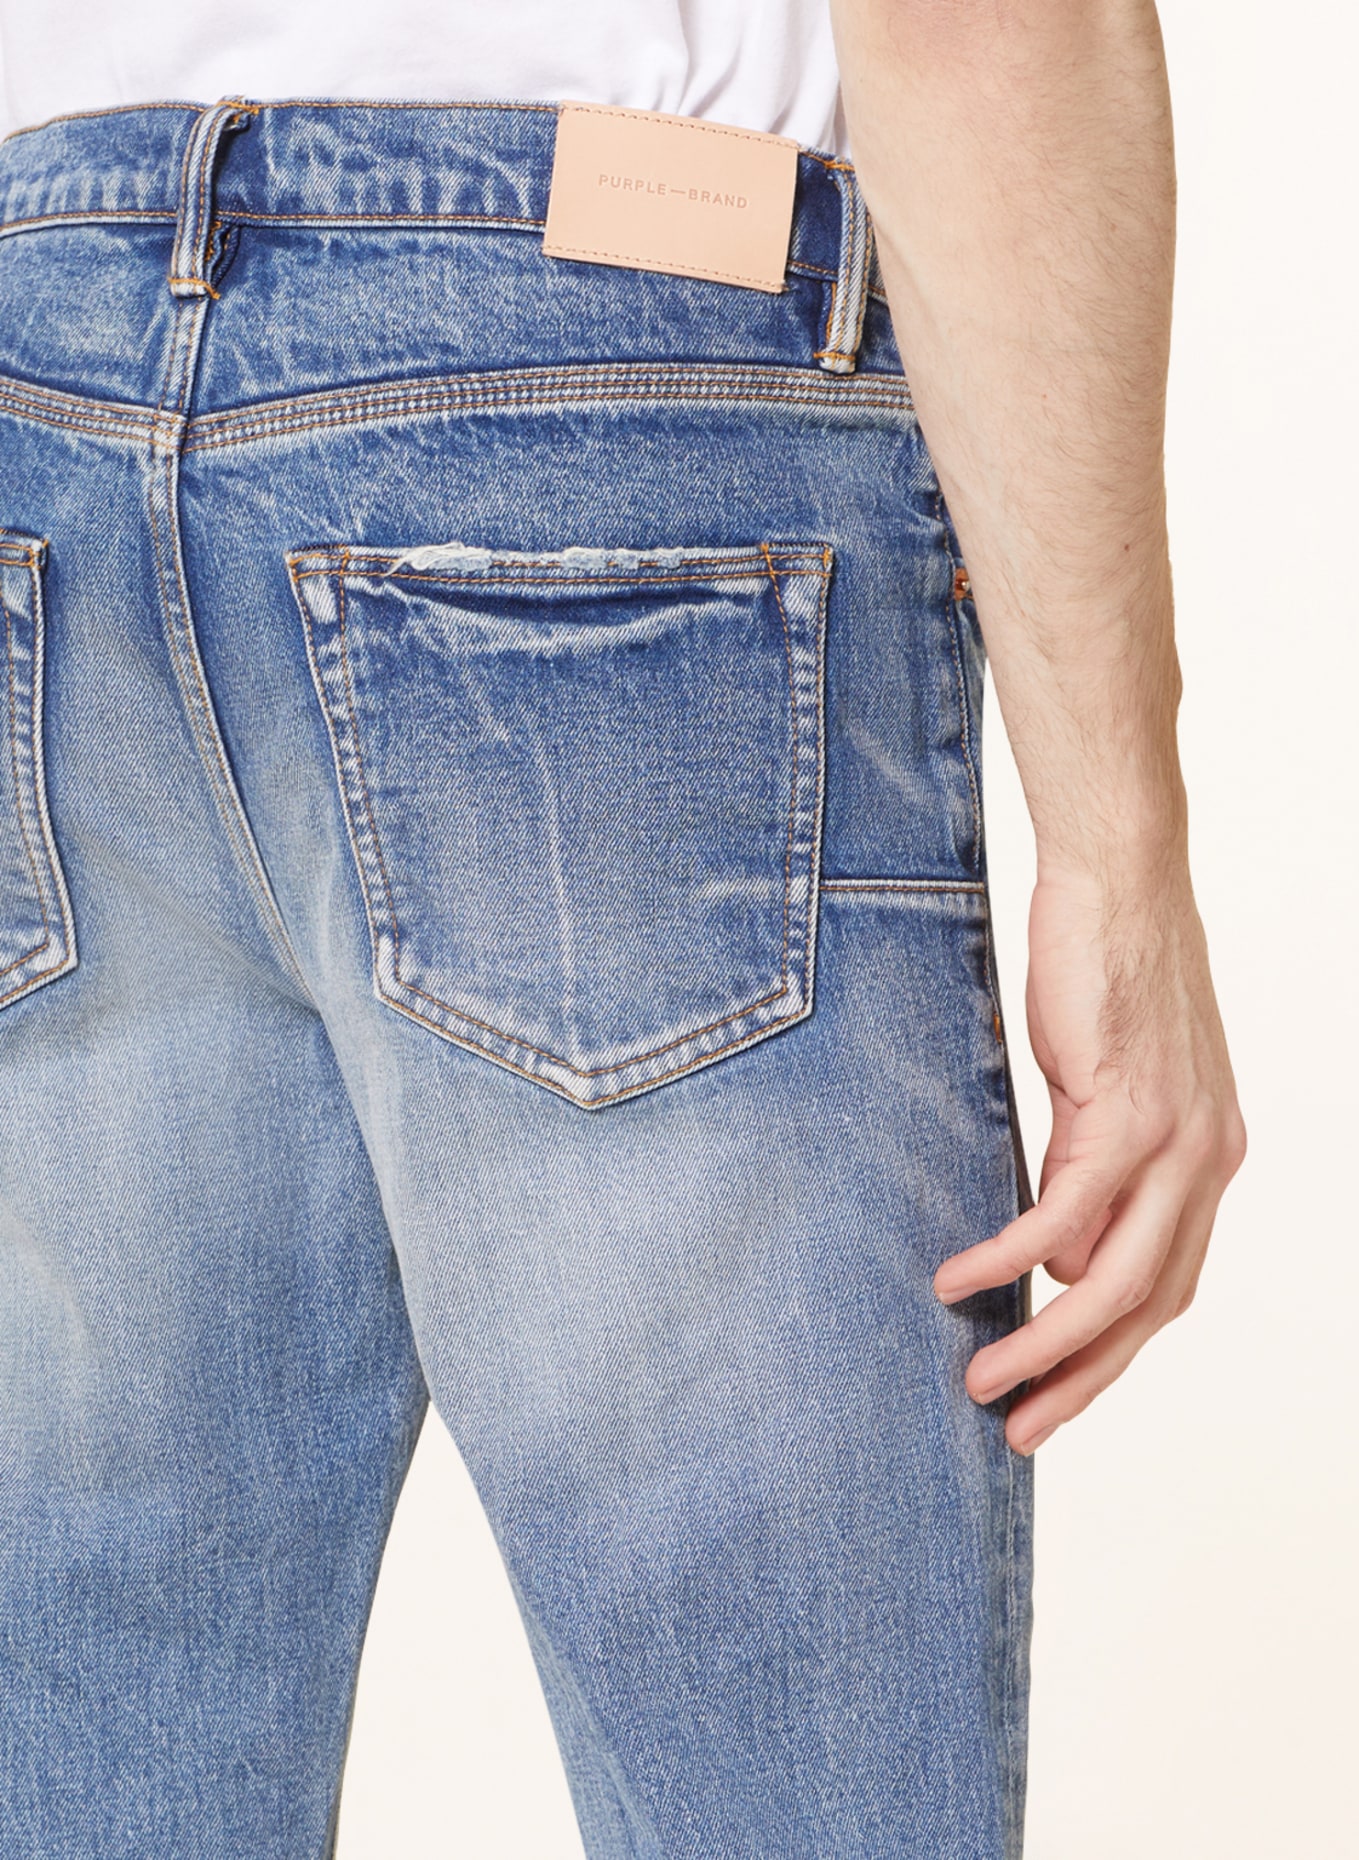 PURPLE BRAND Jeans Slim Fit, Farbe: MDWV MID INDIGO WORN (Bild 6)